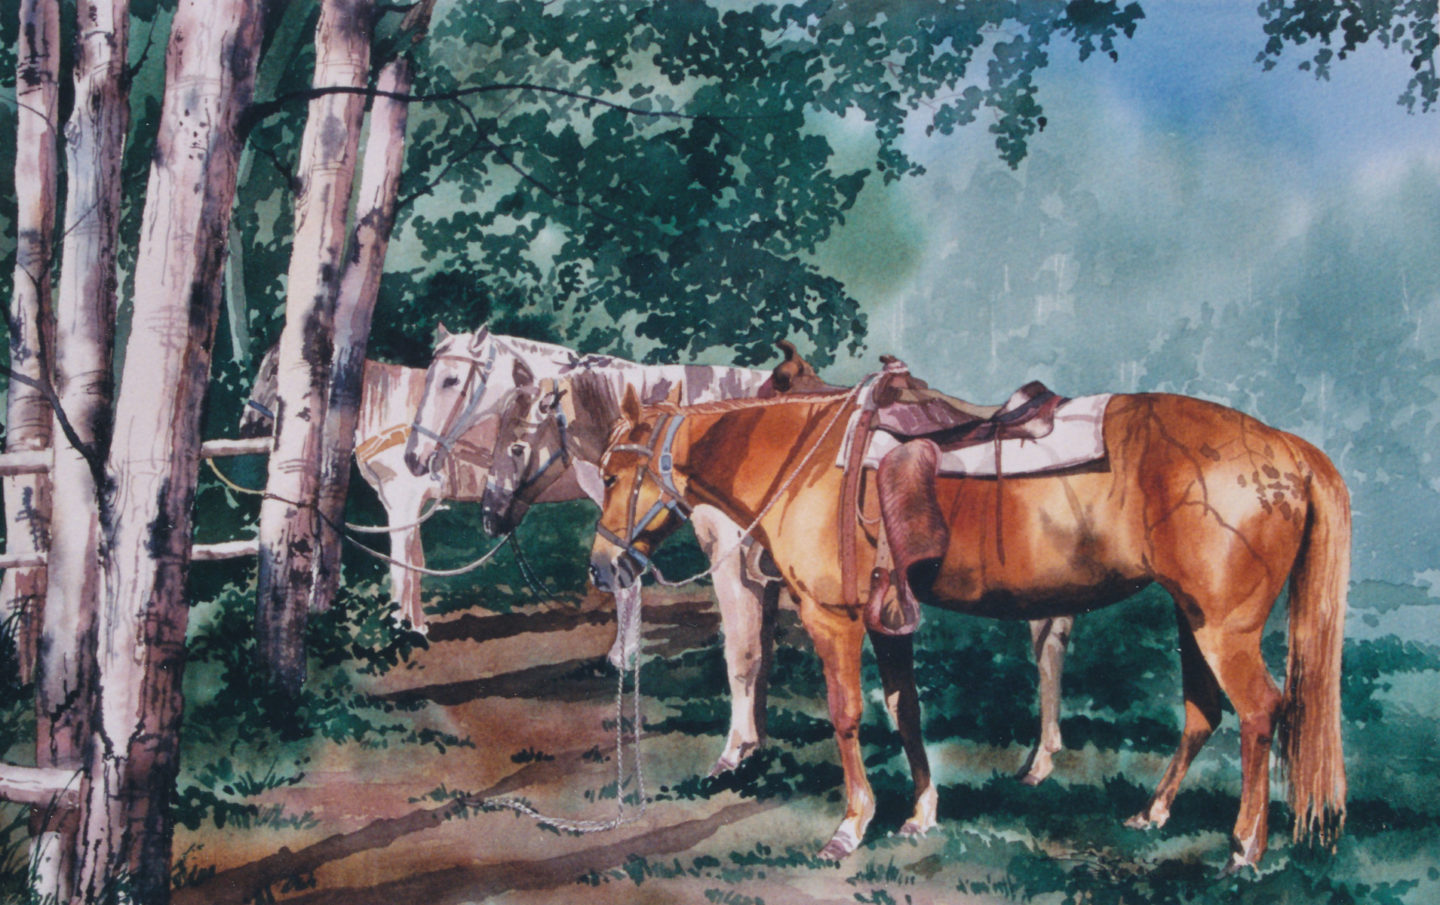 Trail Ride Team, 13x22, Watercolor, 1997 - 